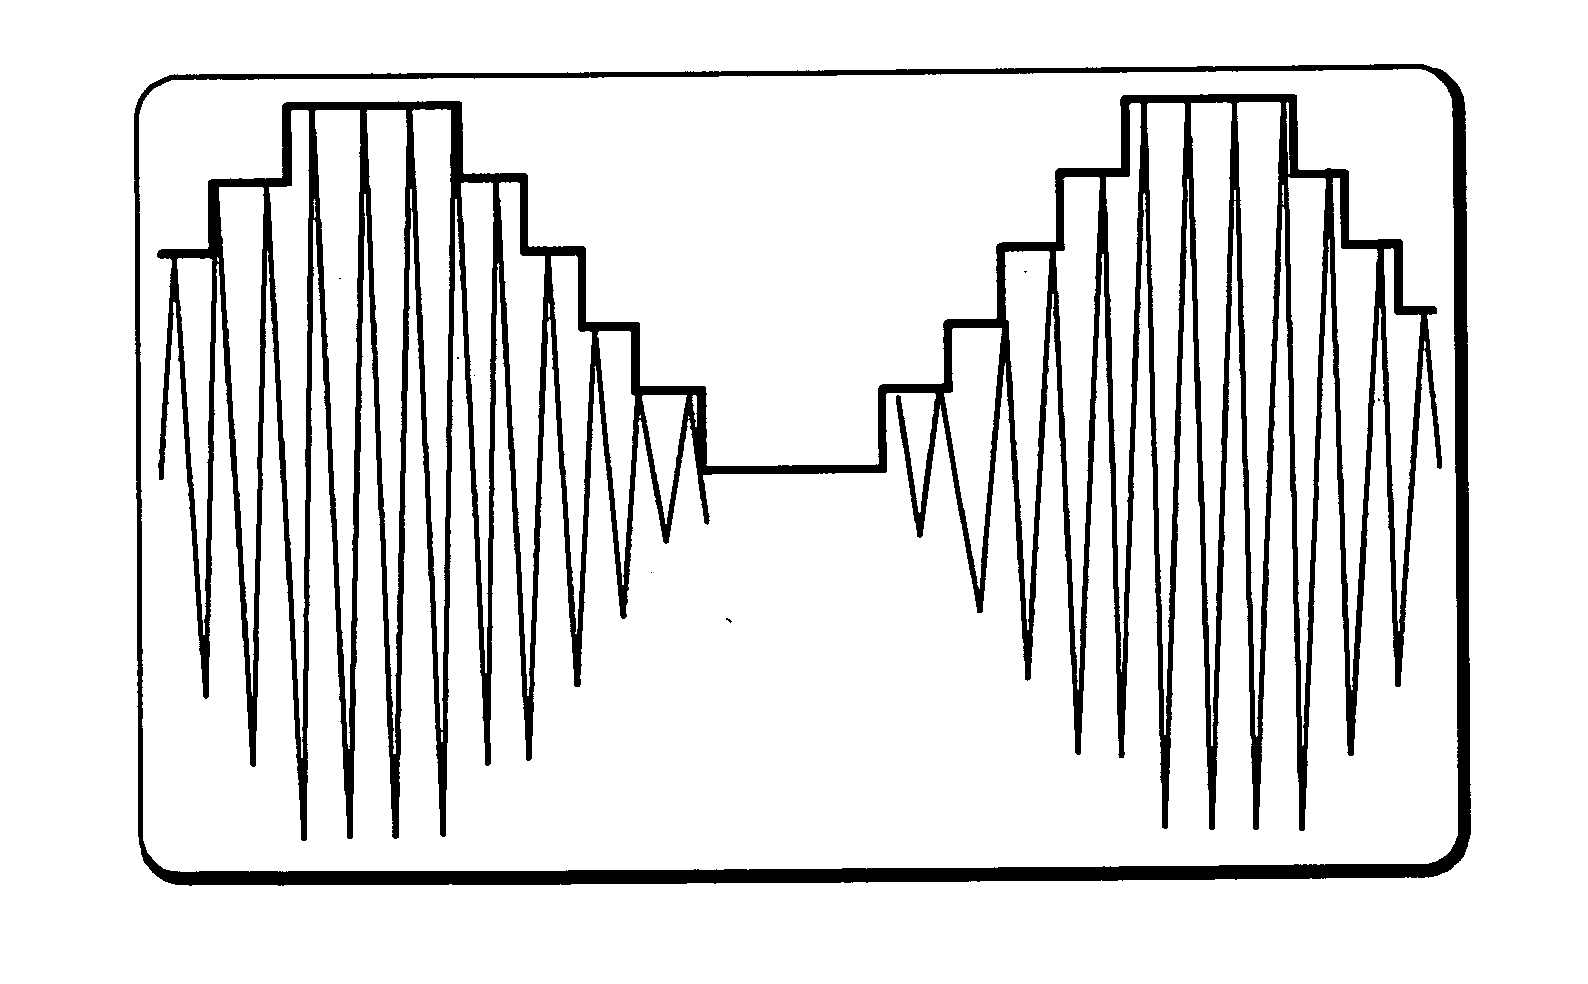 Digital amplitude modulation transmitter with pulse width modulating RF drive